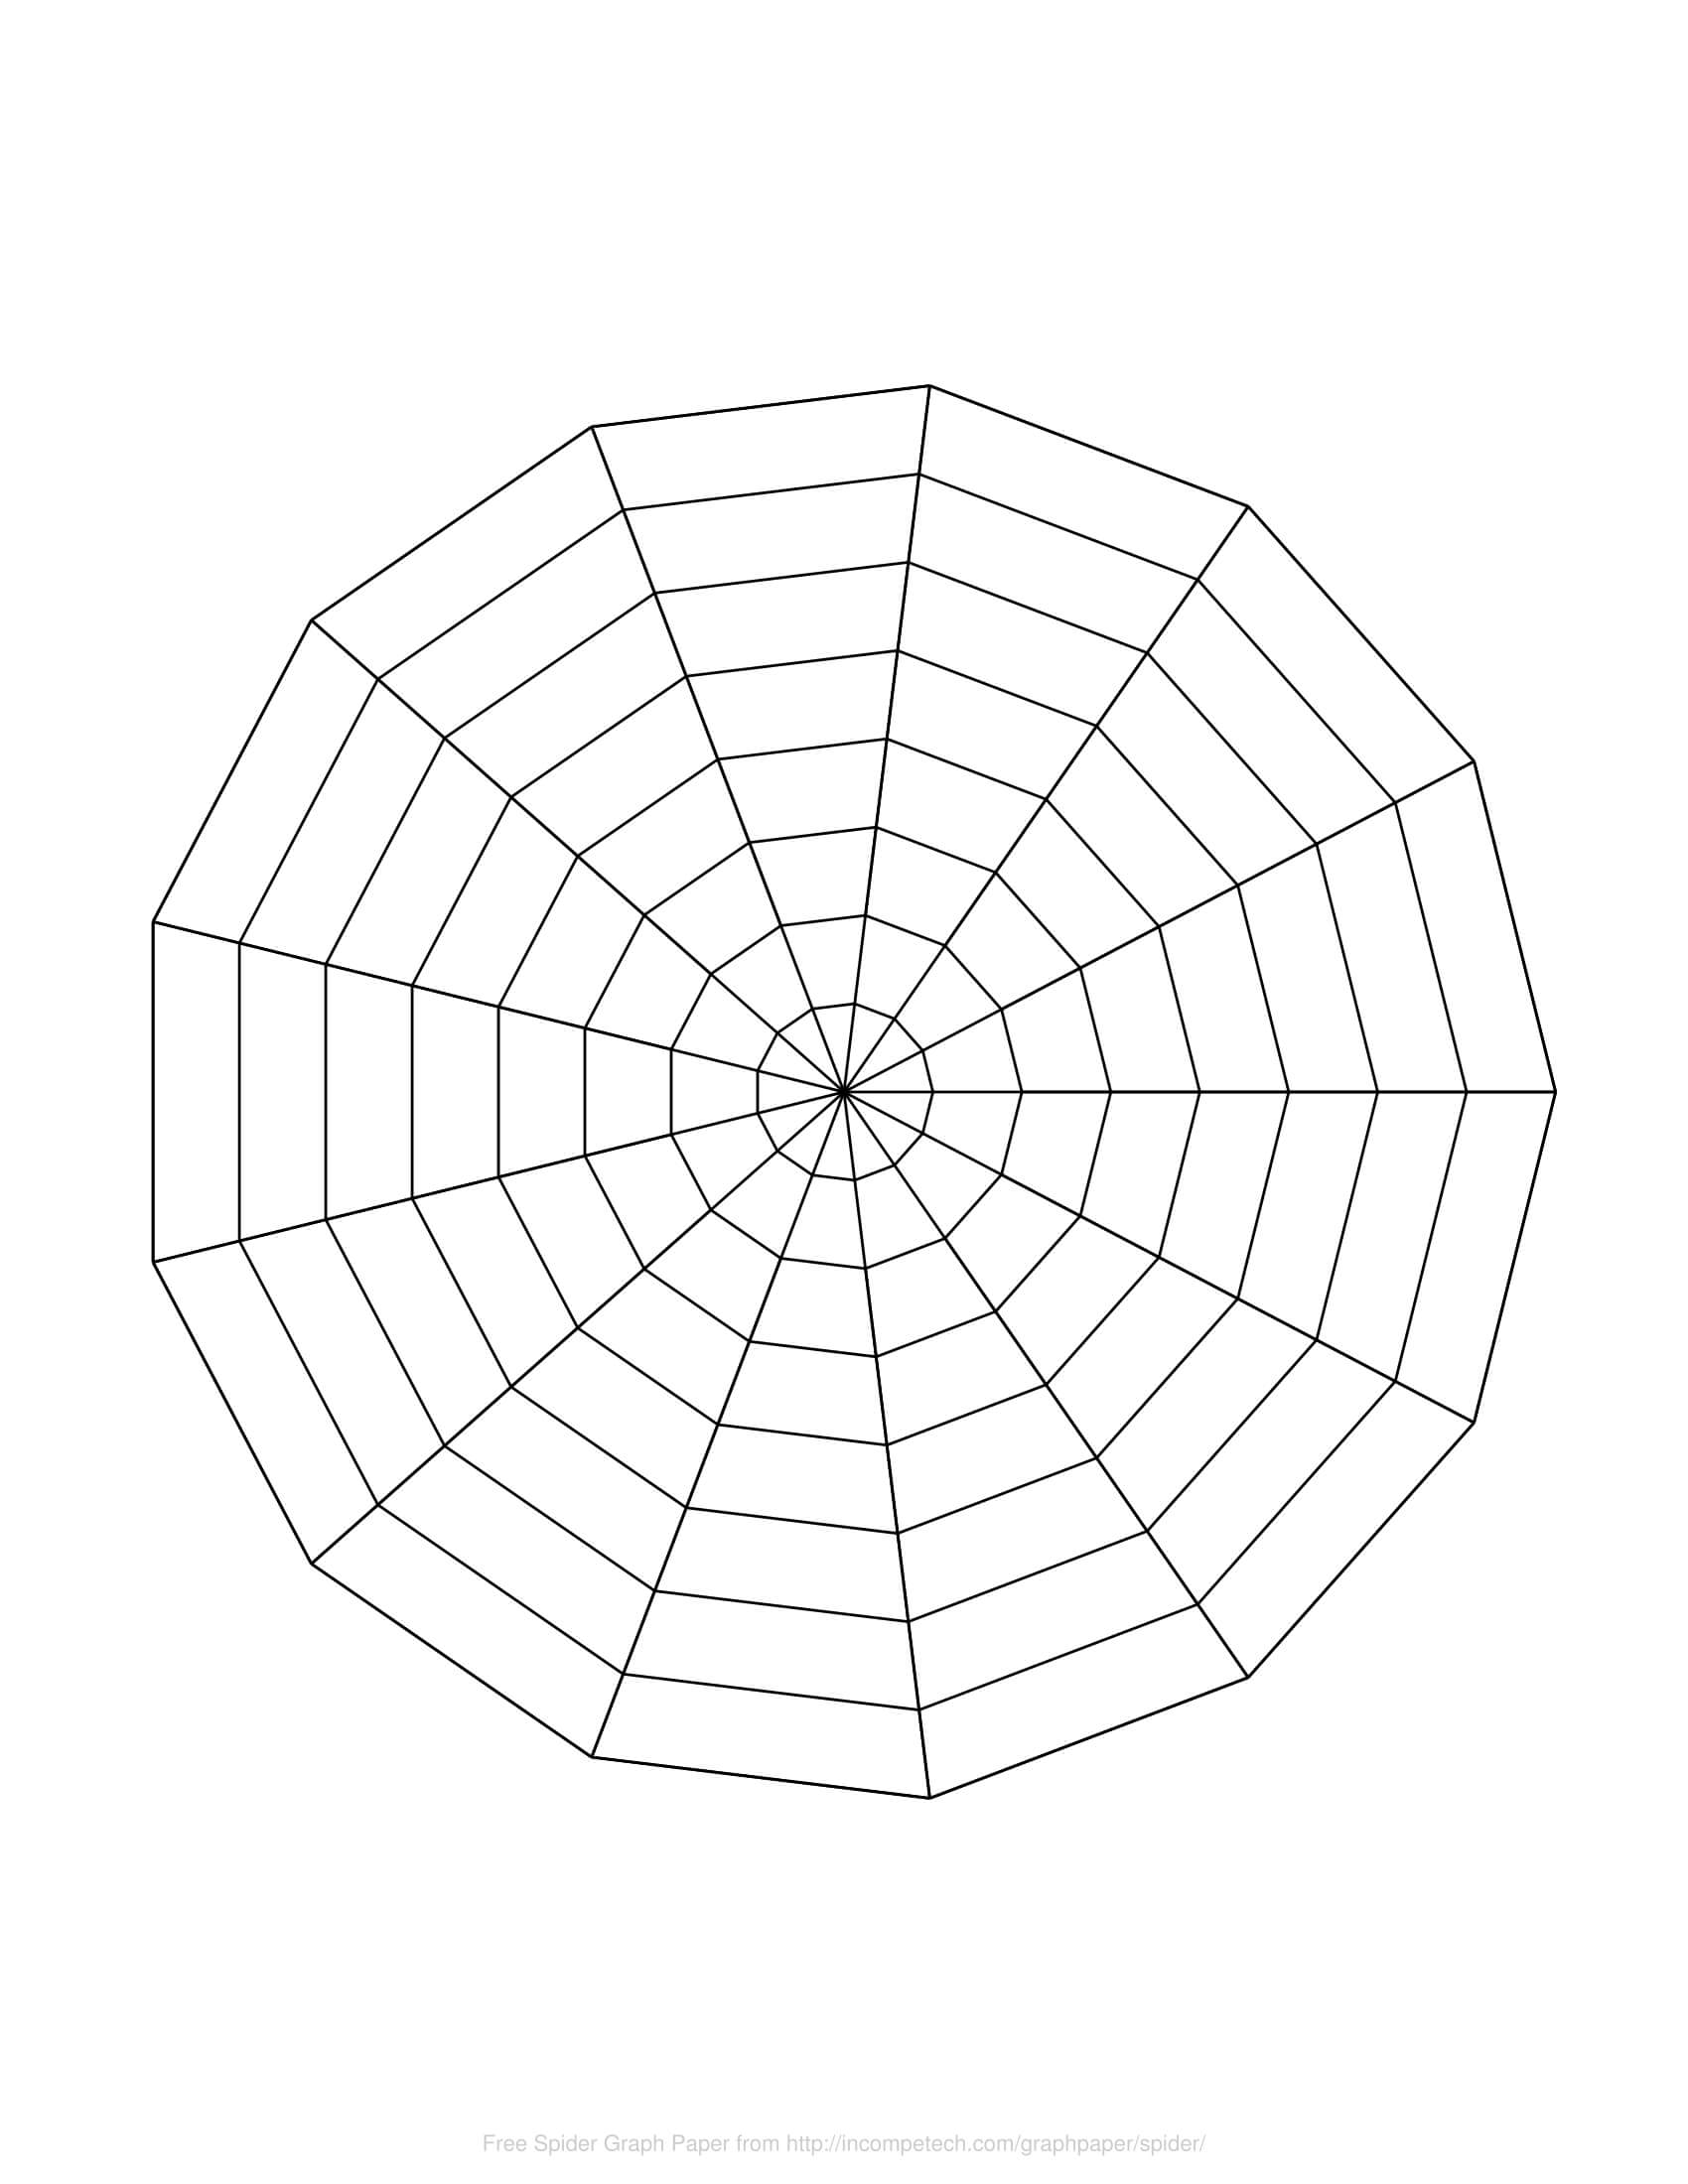 Free Online Graph Paper / Spider Regarding Blank Radar Chart Template